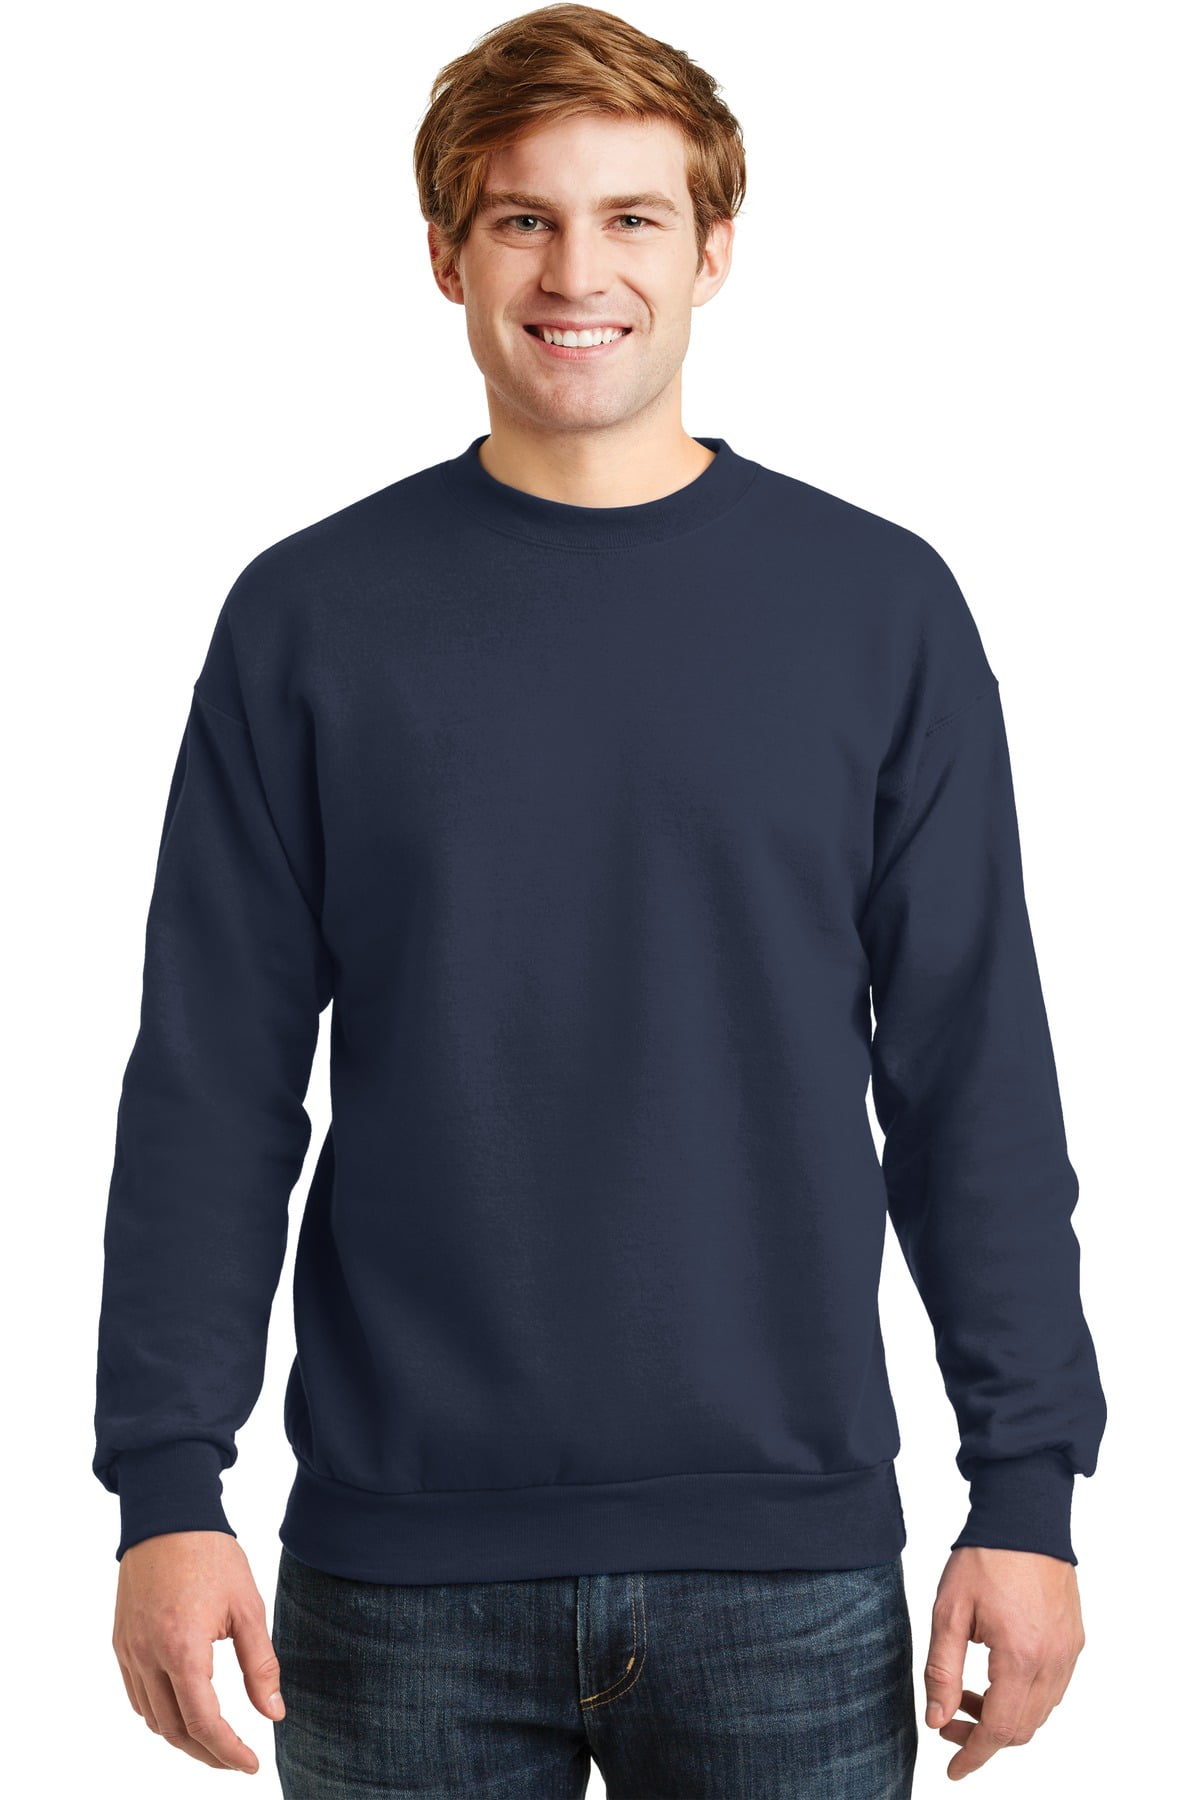 Hanes Men's Long Sleeve Crewneck Sweatshirt. P160 - Walmart.com